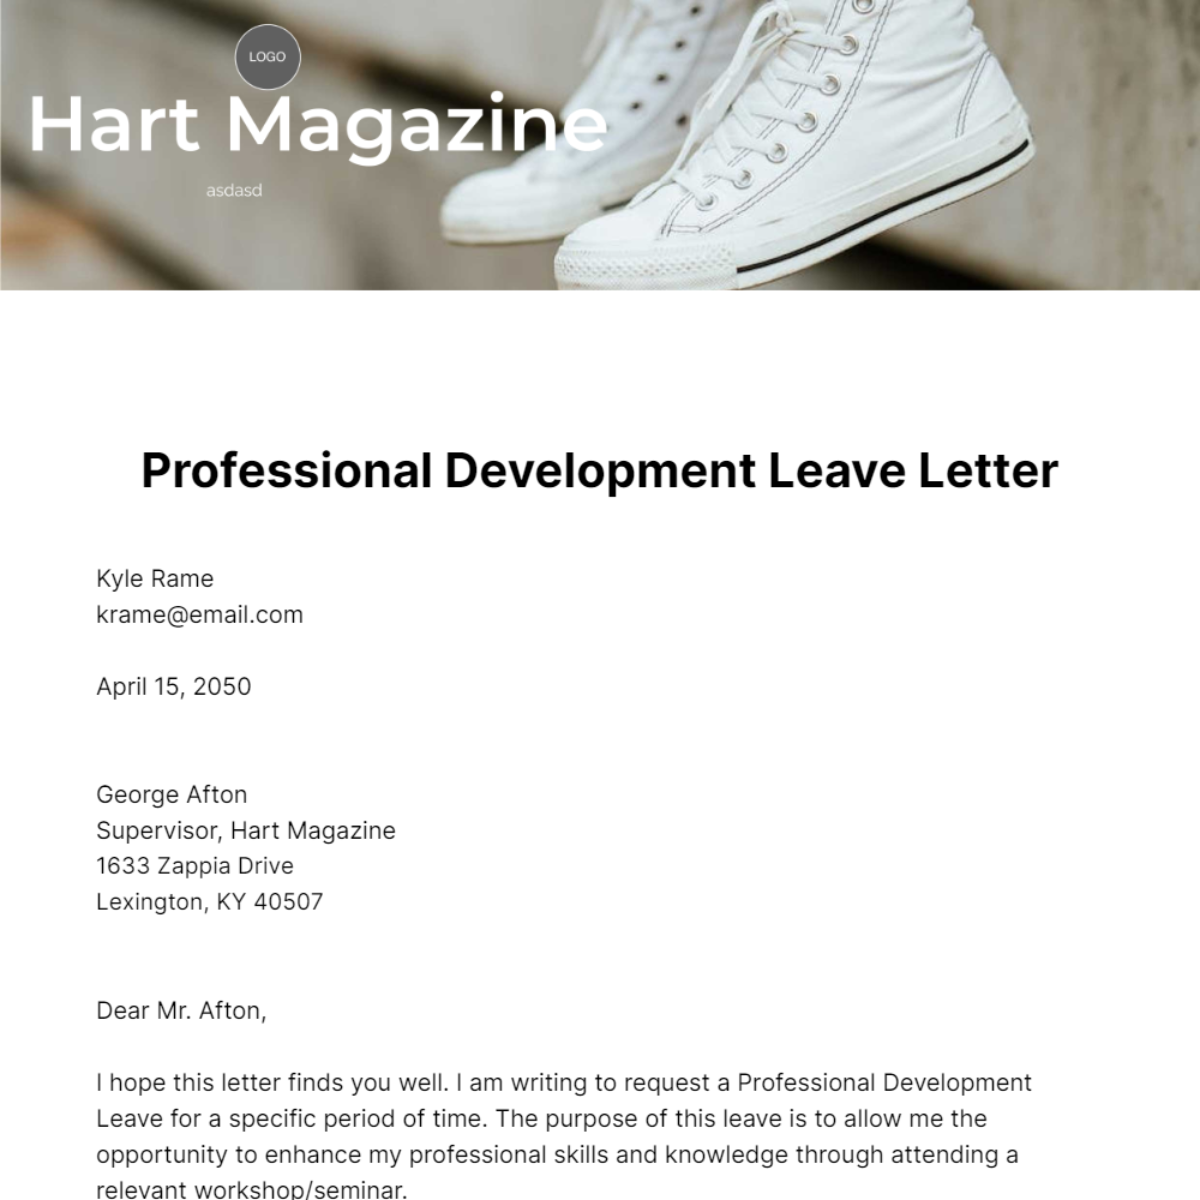 Professional Development Leave Letter Template